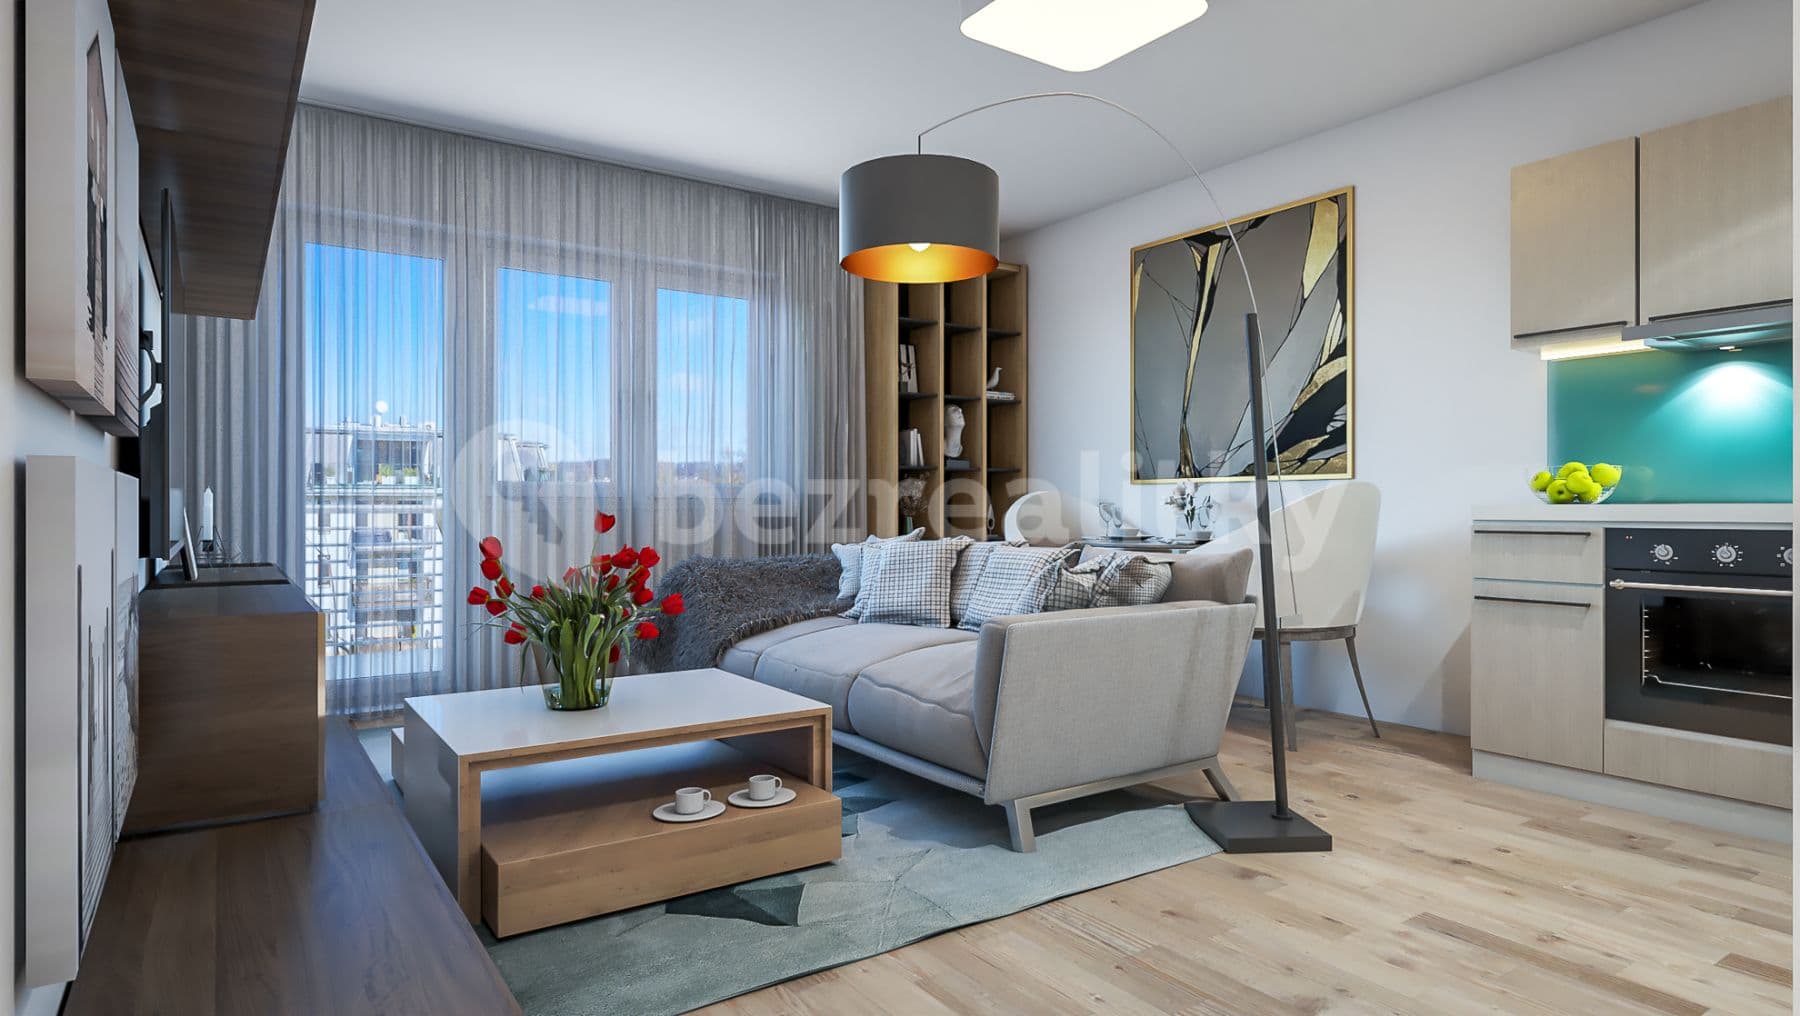 1 bedroom with open-plan kitchen flat for sale, 55 m², Prague, Prague